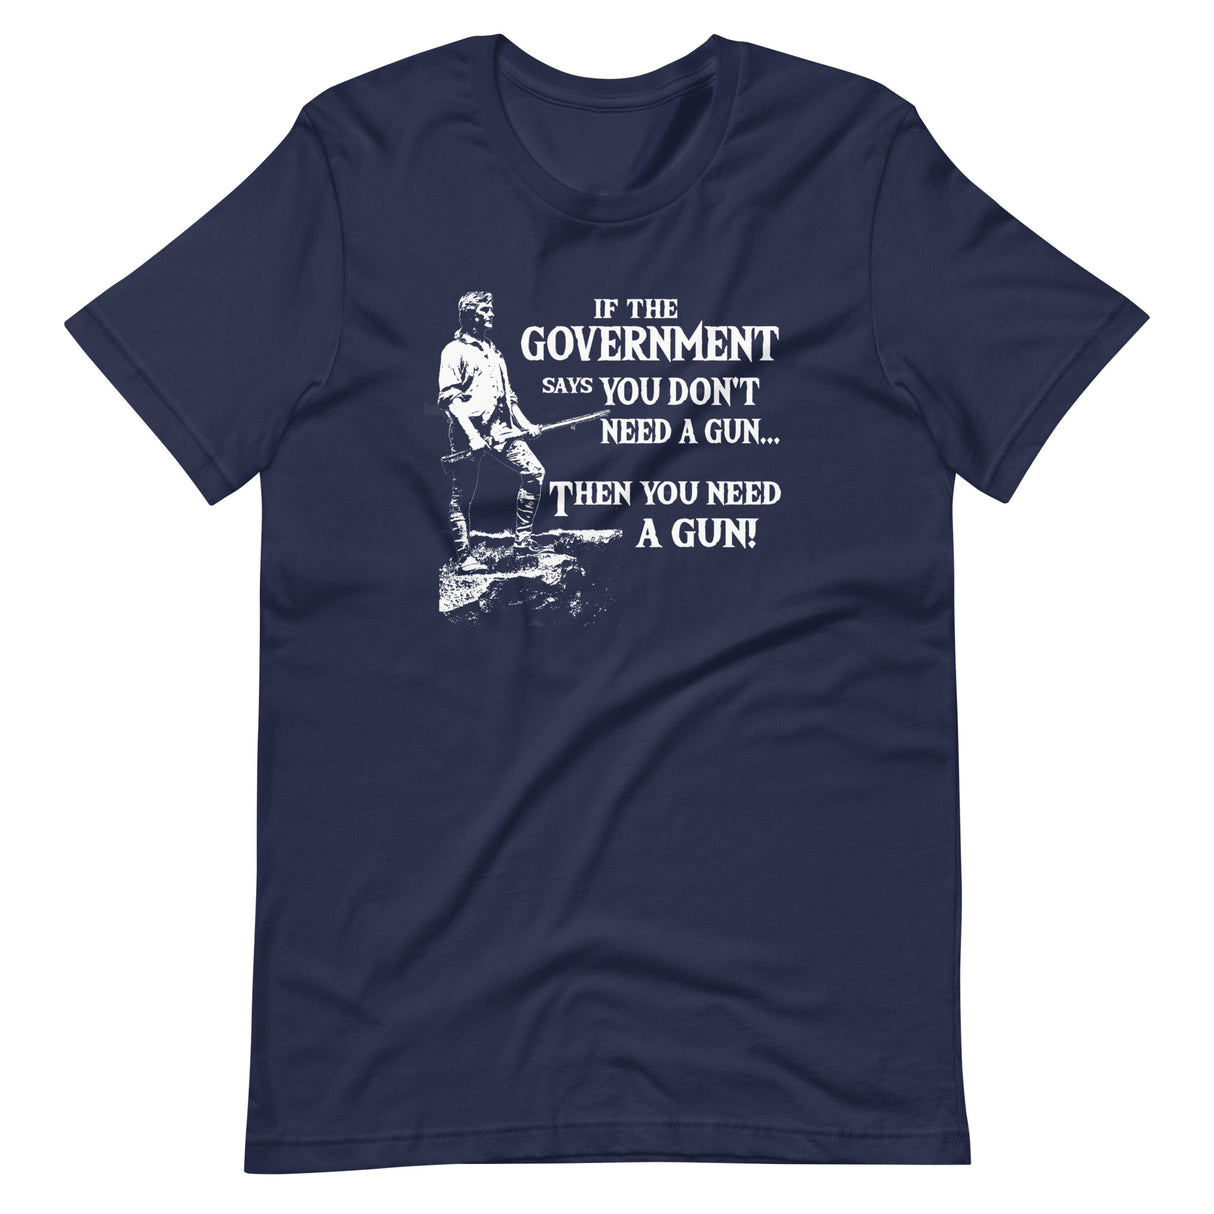 You Need a Gun Shirt - Libertarian Country